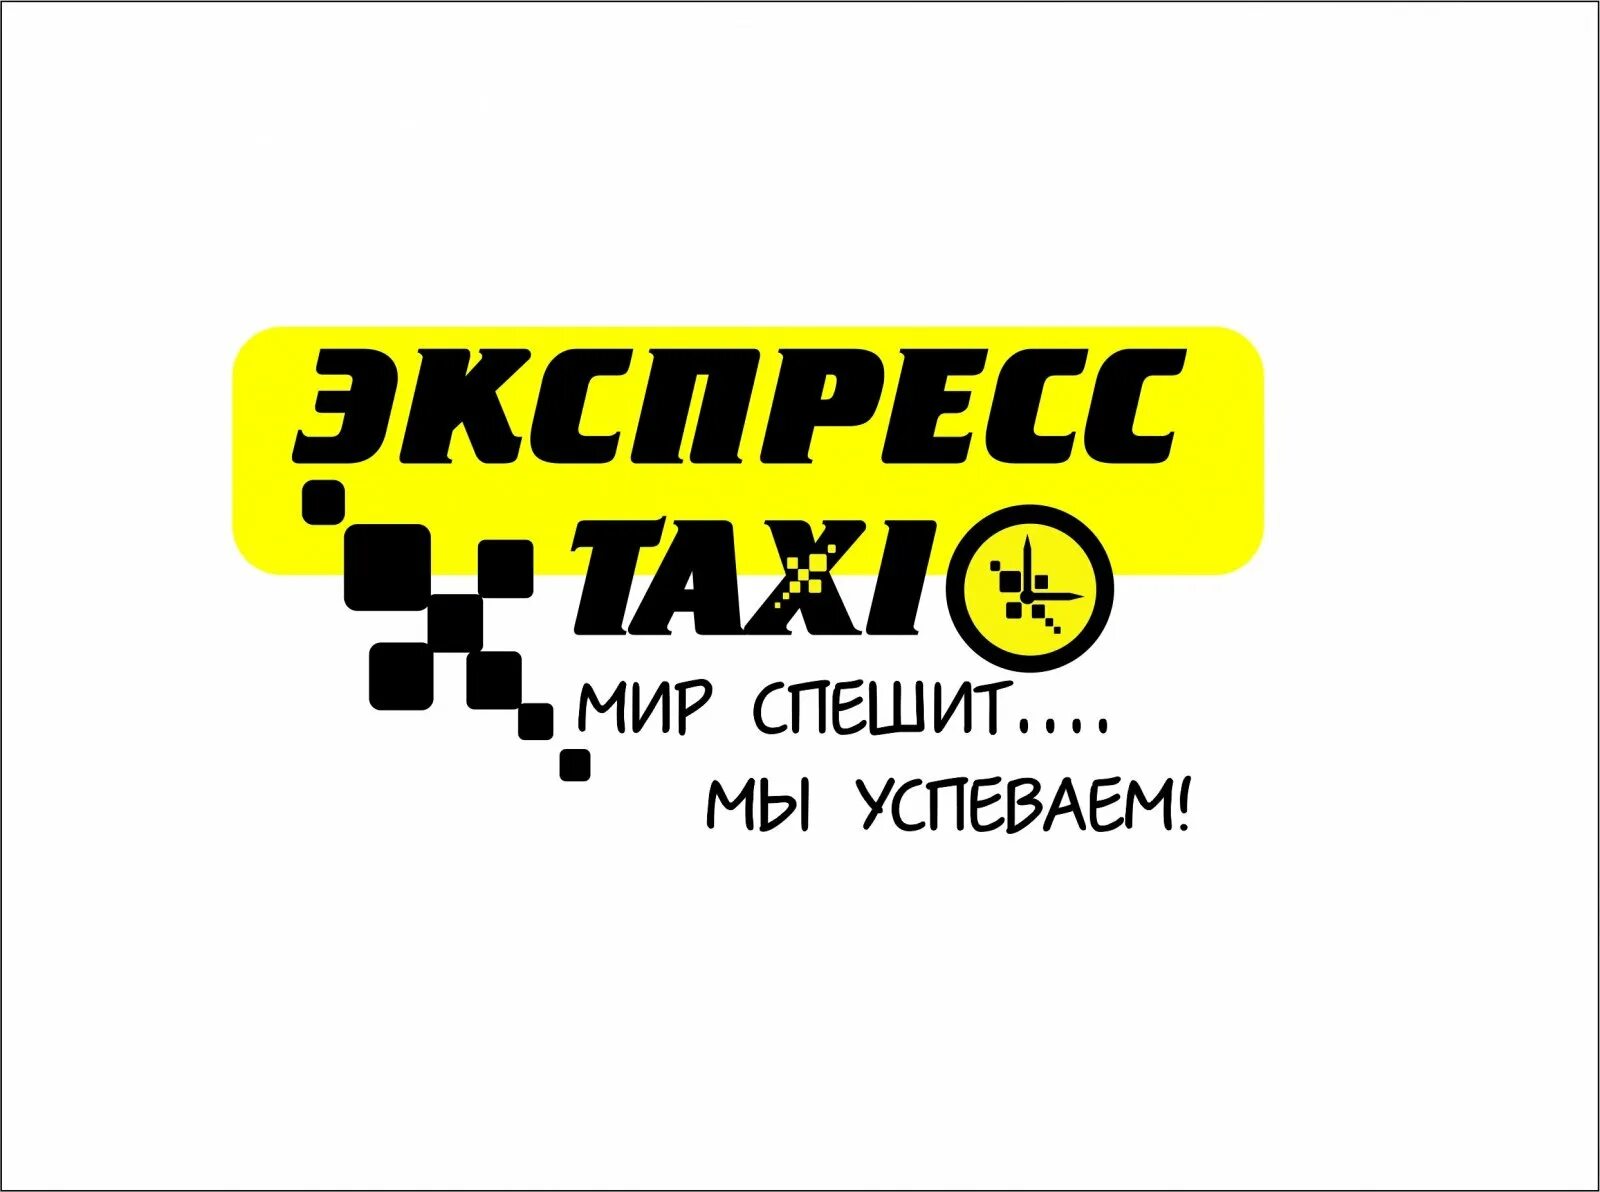 Такси мишкино. Логотип такси. Надпись такси. Аватарка такси. Такси экспресс.